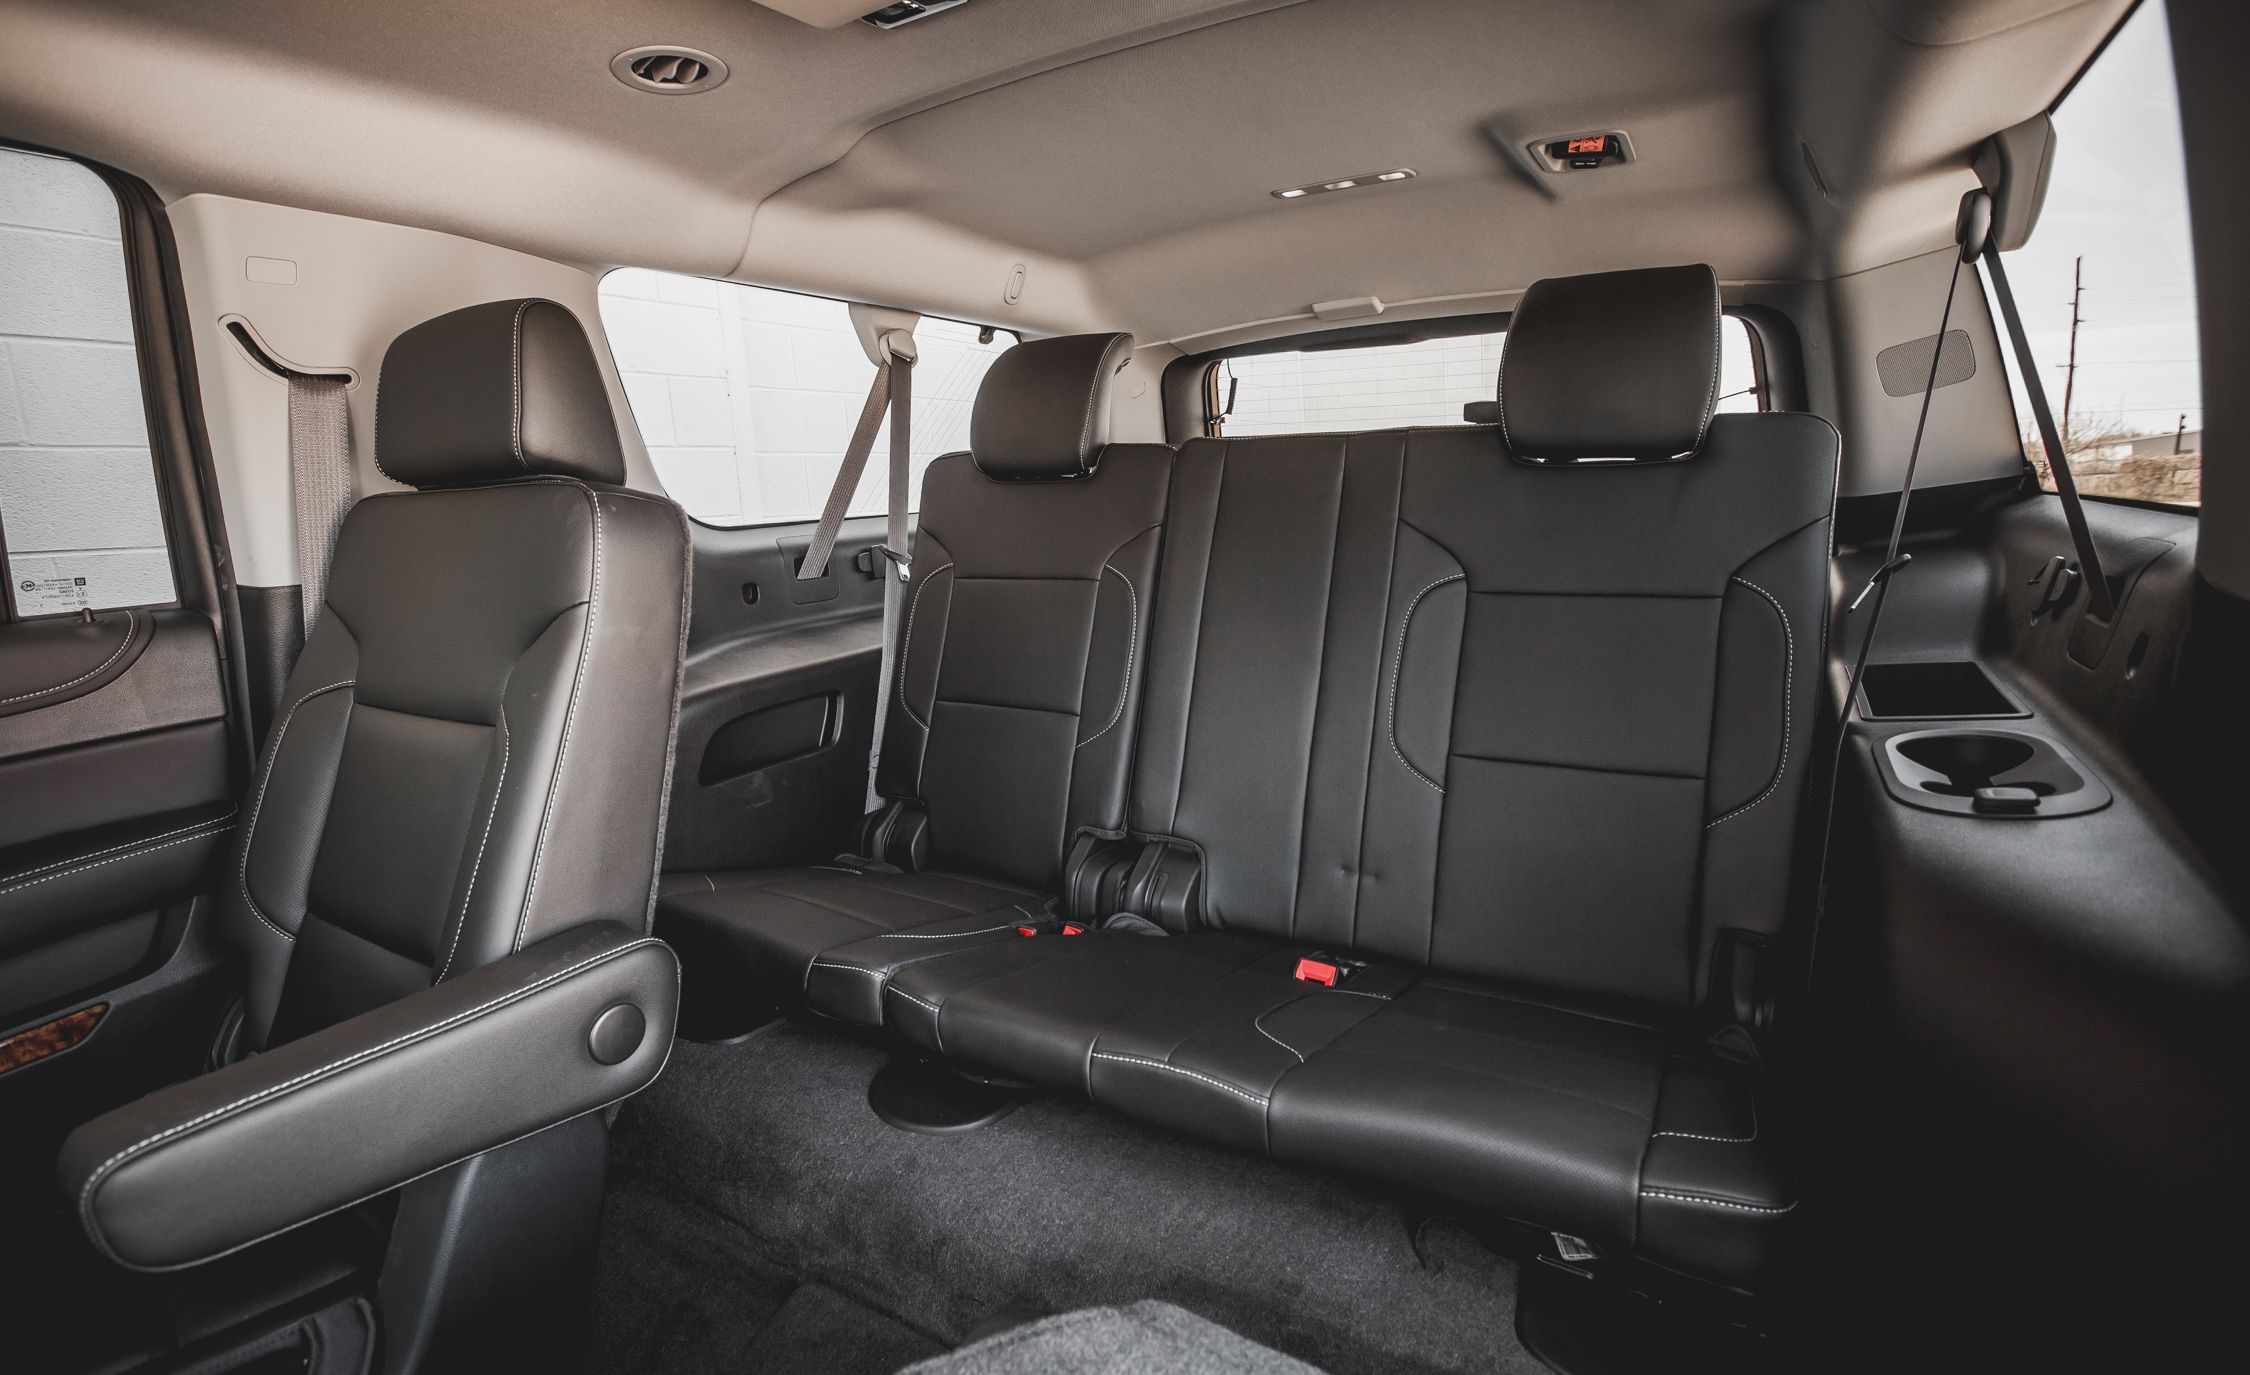 2015 Chevrolet Suburban LTZ Interior (View 15 of 33)